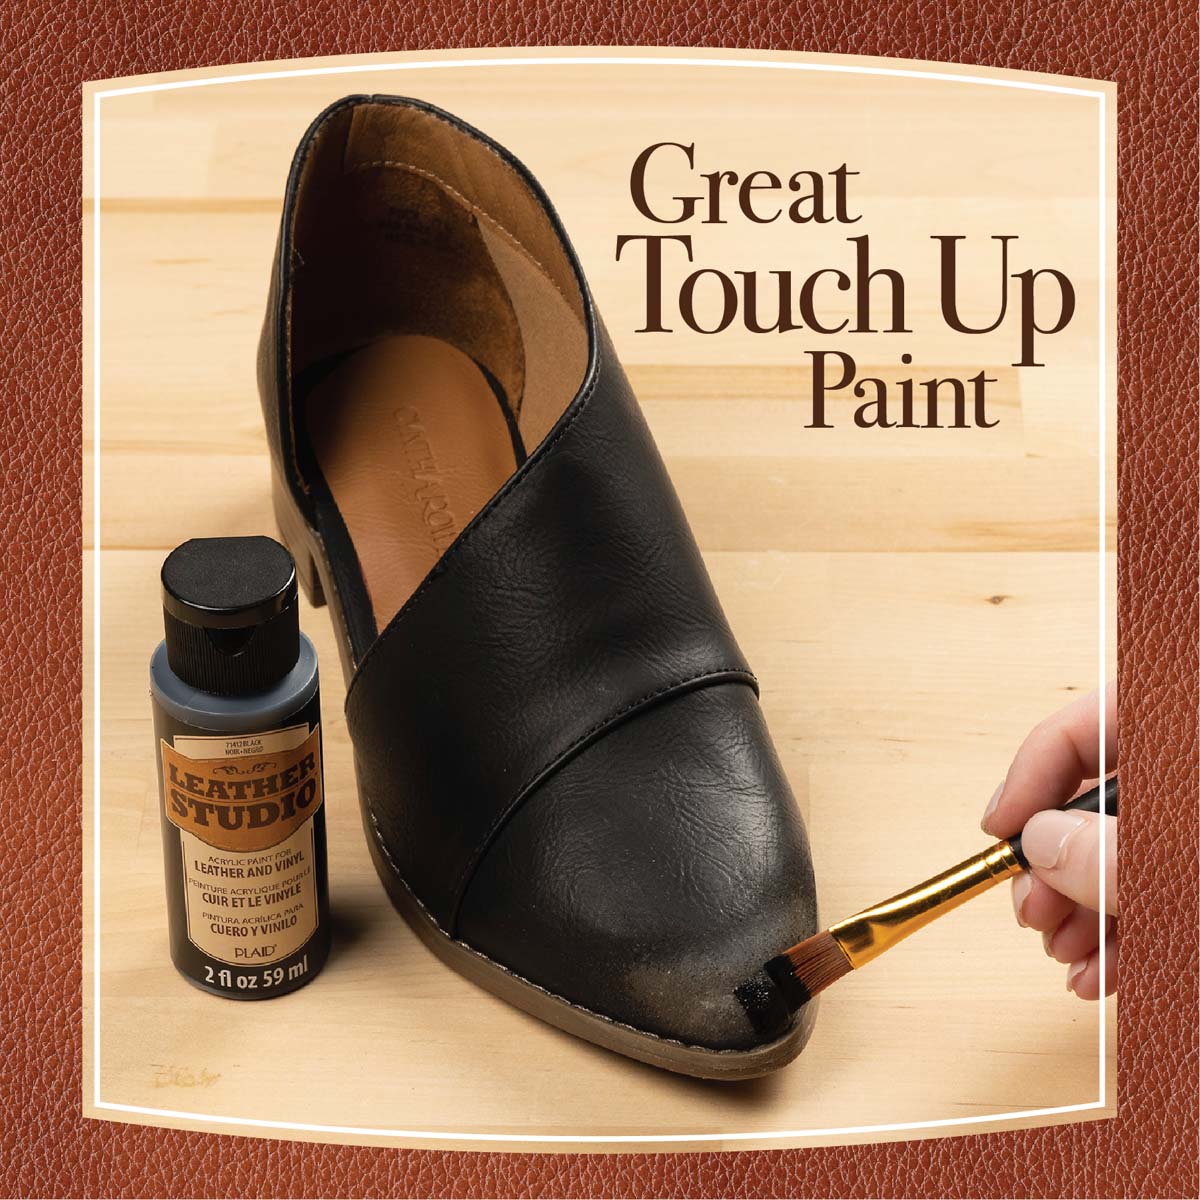 Leather Studio™ Leather & Vinyl Paint Set, 6 pc. - 13510